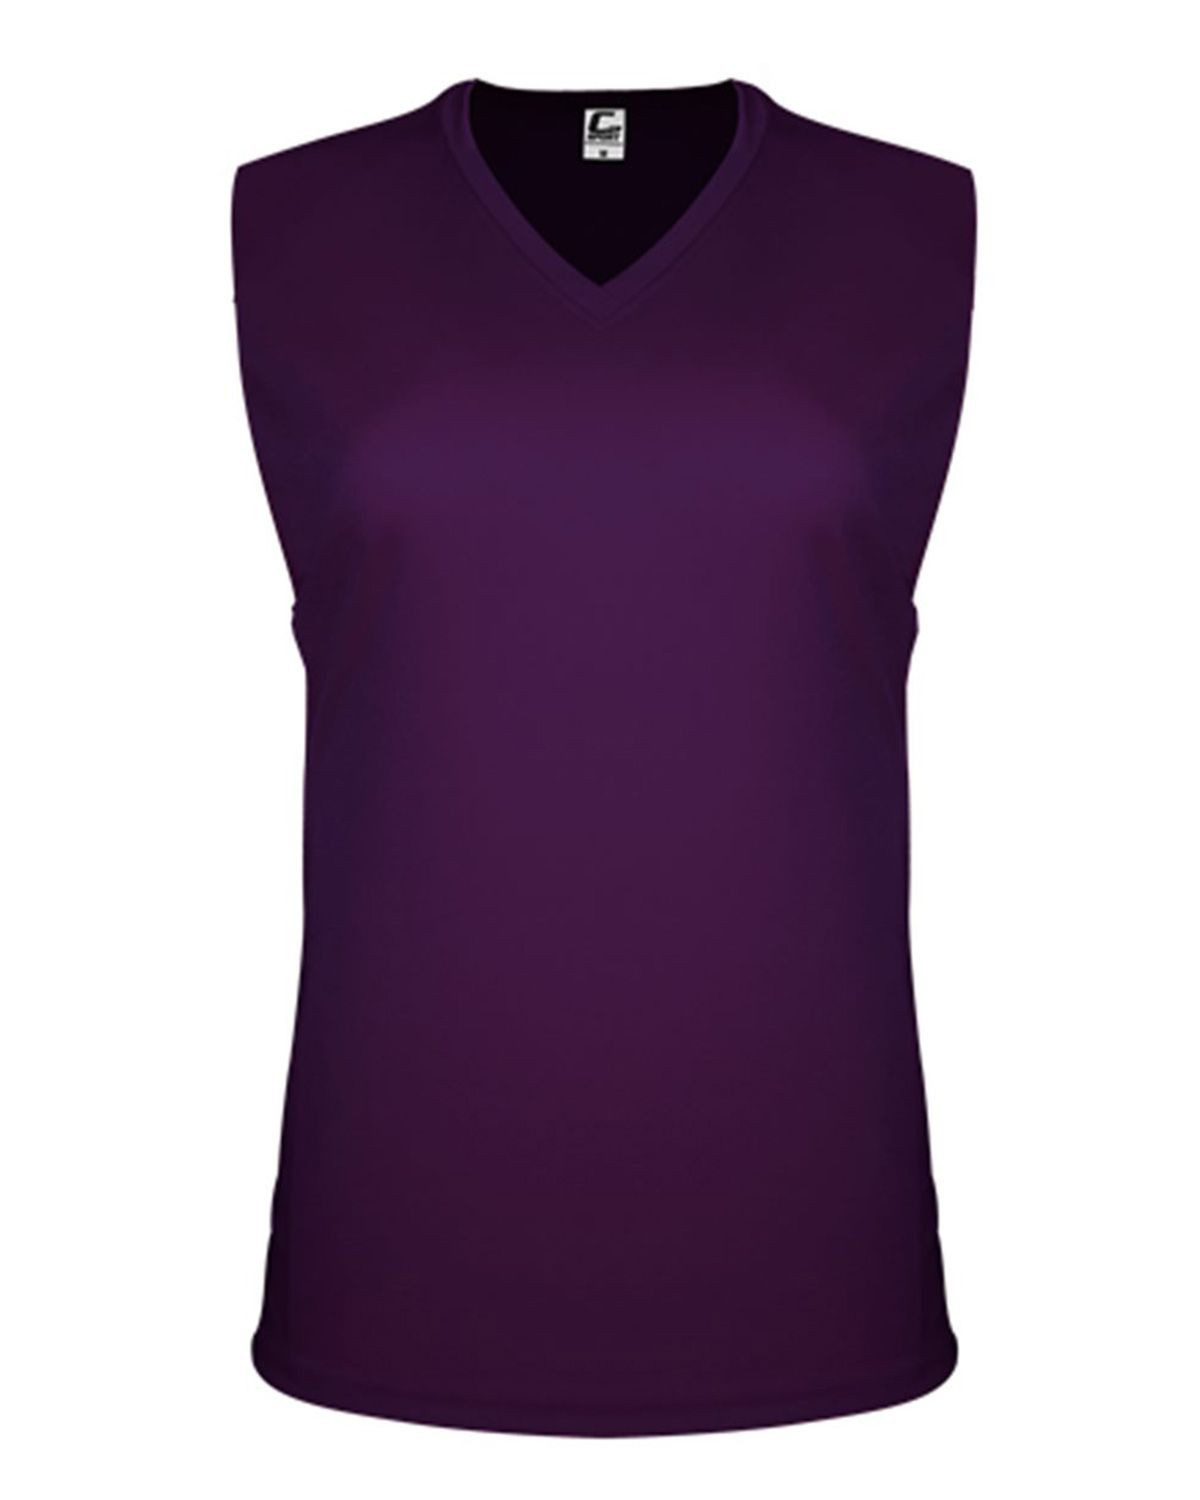 C2 Sport 5663 Women's Sleeveless Tee - Purple - XS #sleeveless